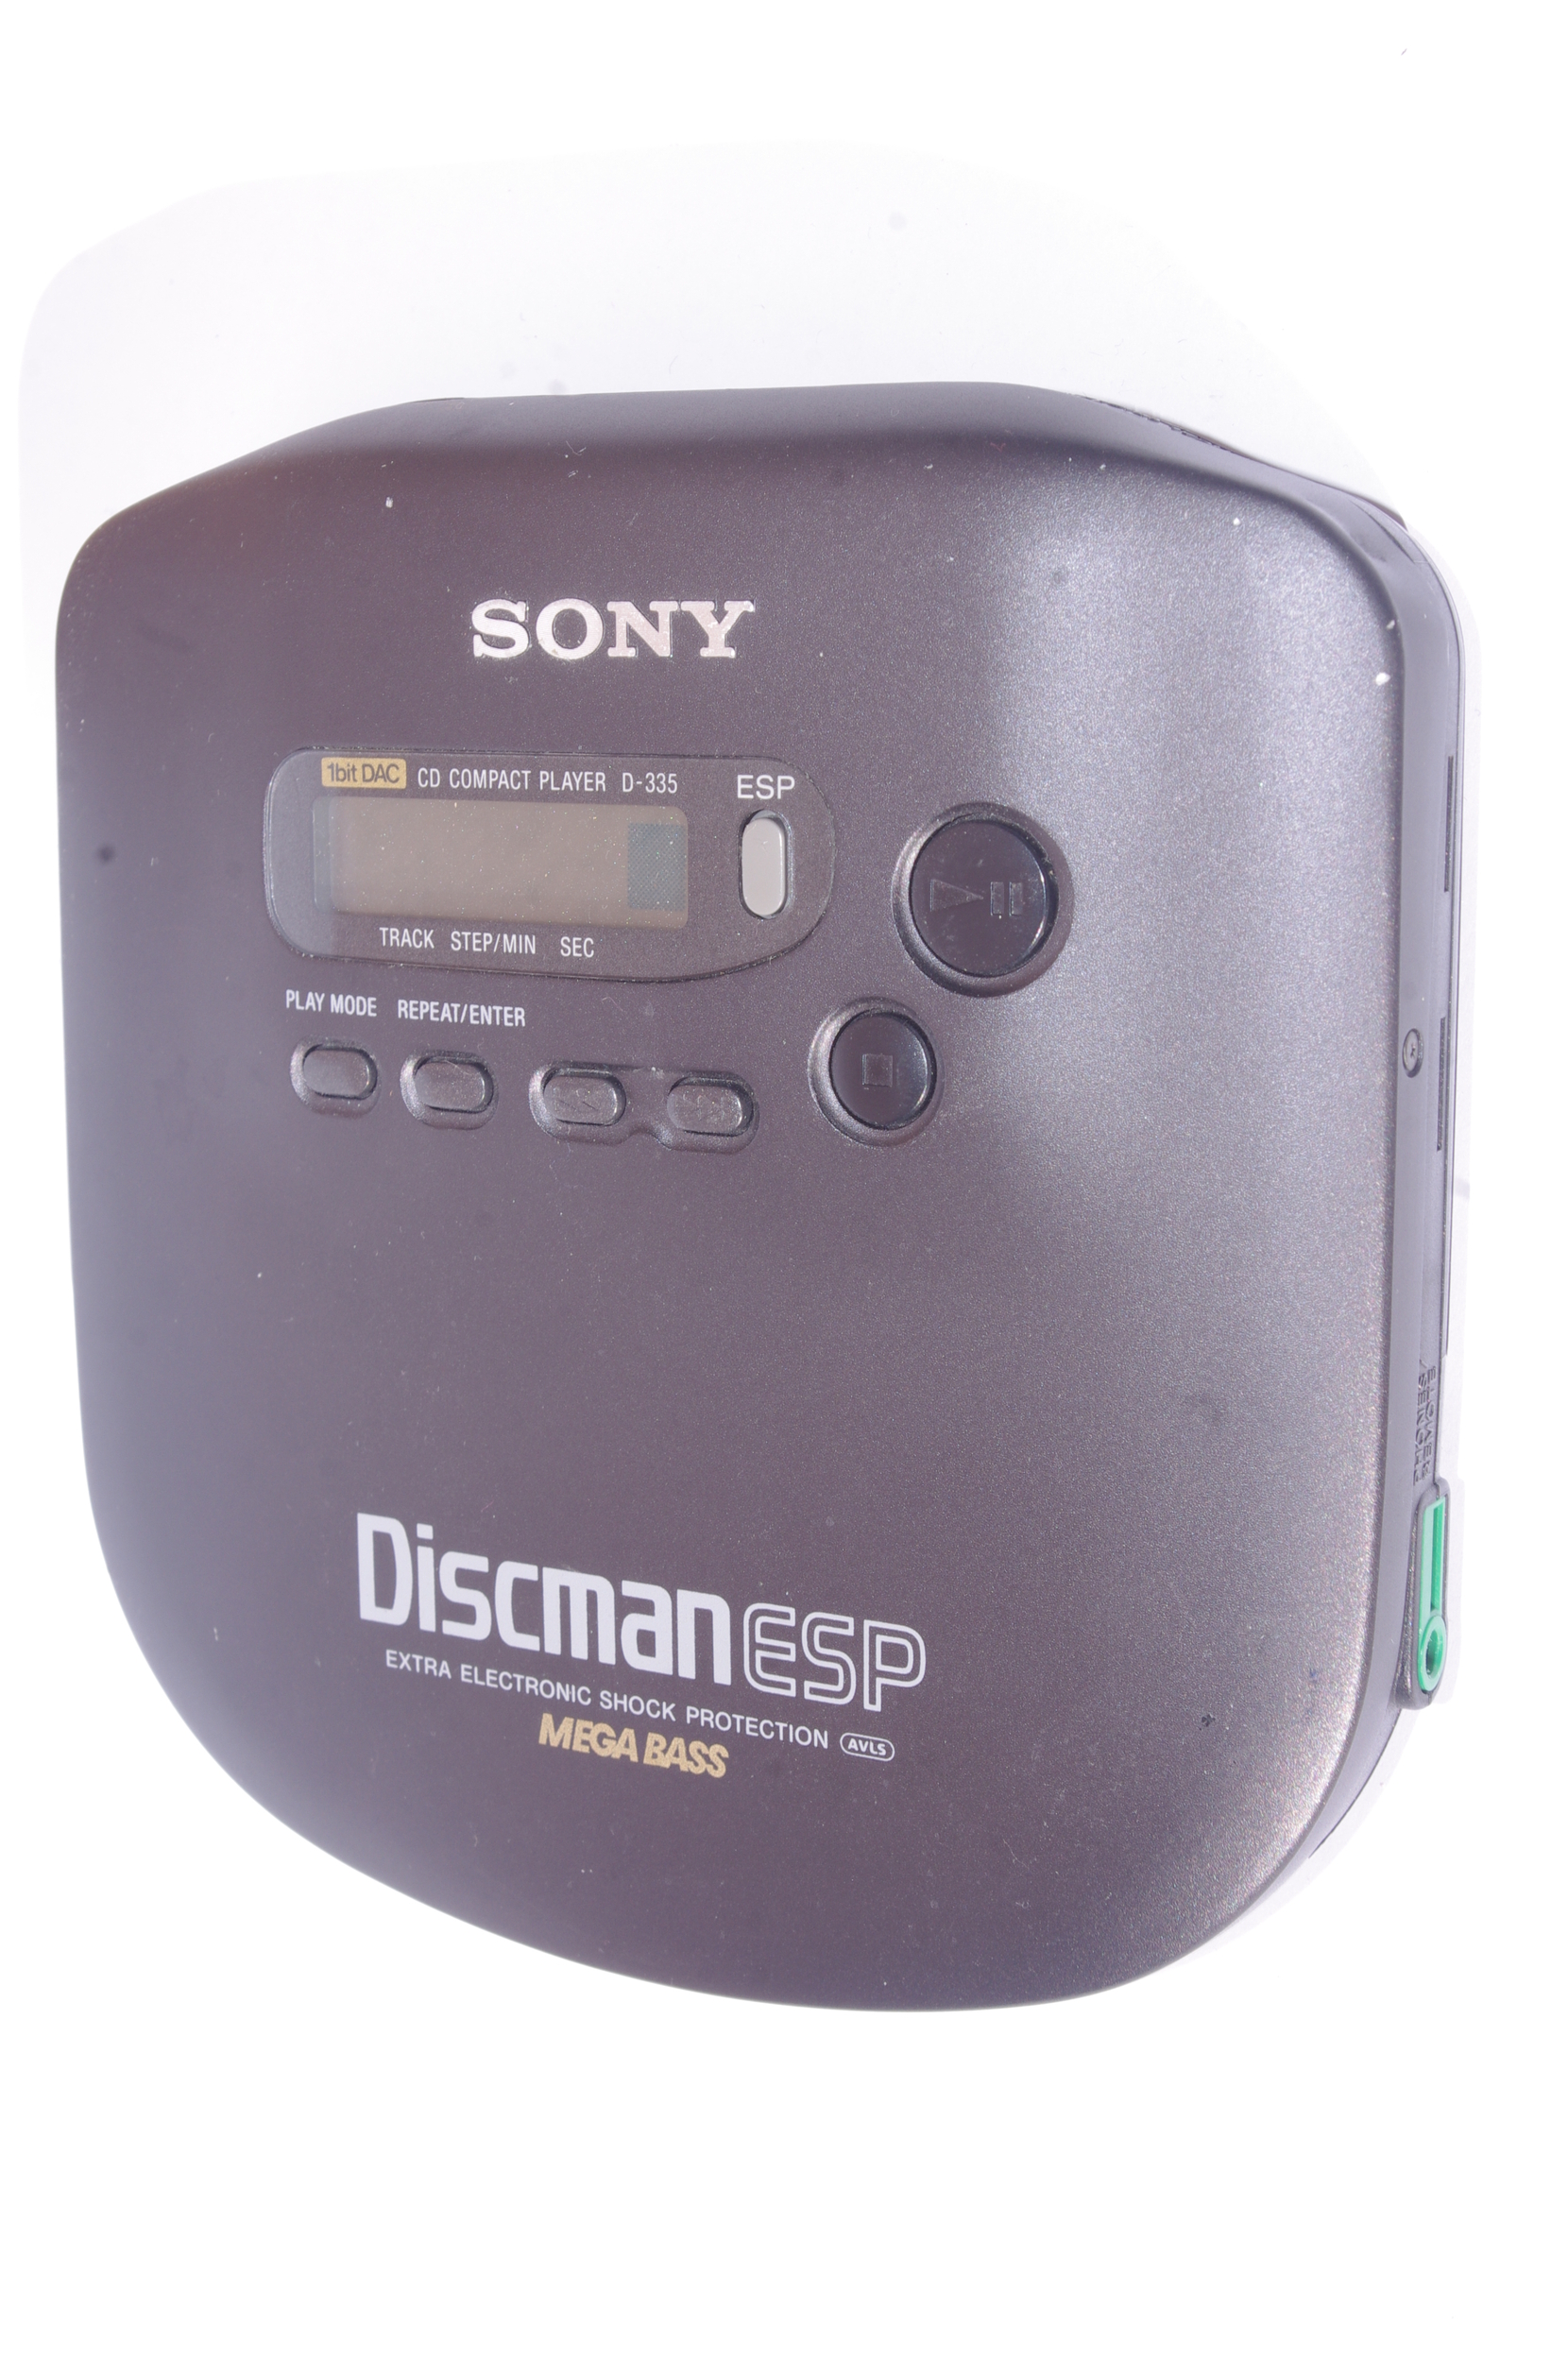 SONY-D335-DISCMAN-ESP-LECTEUR-PLAYER-CD-VINTAGE-LEMASTERBROCKERS